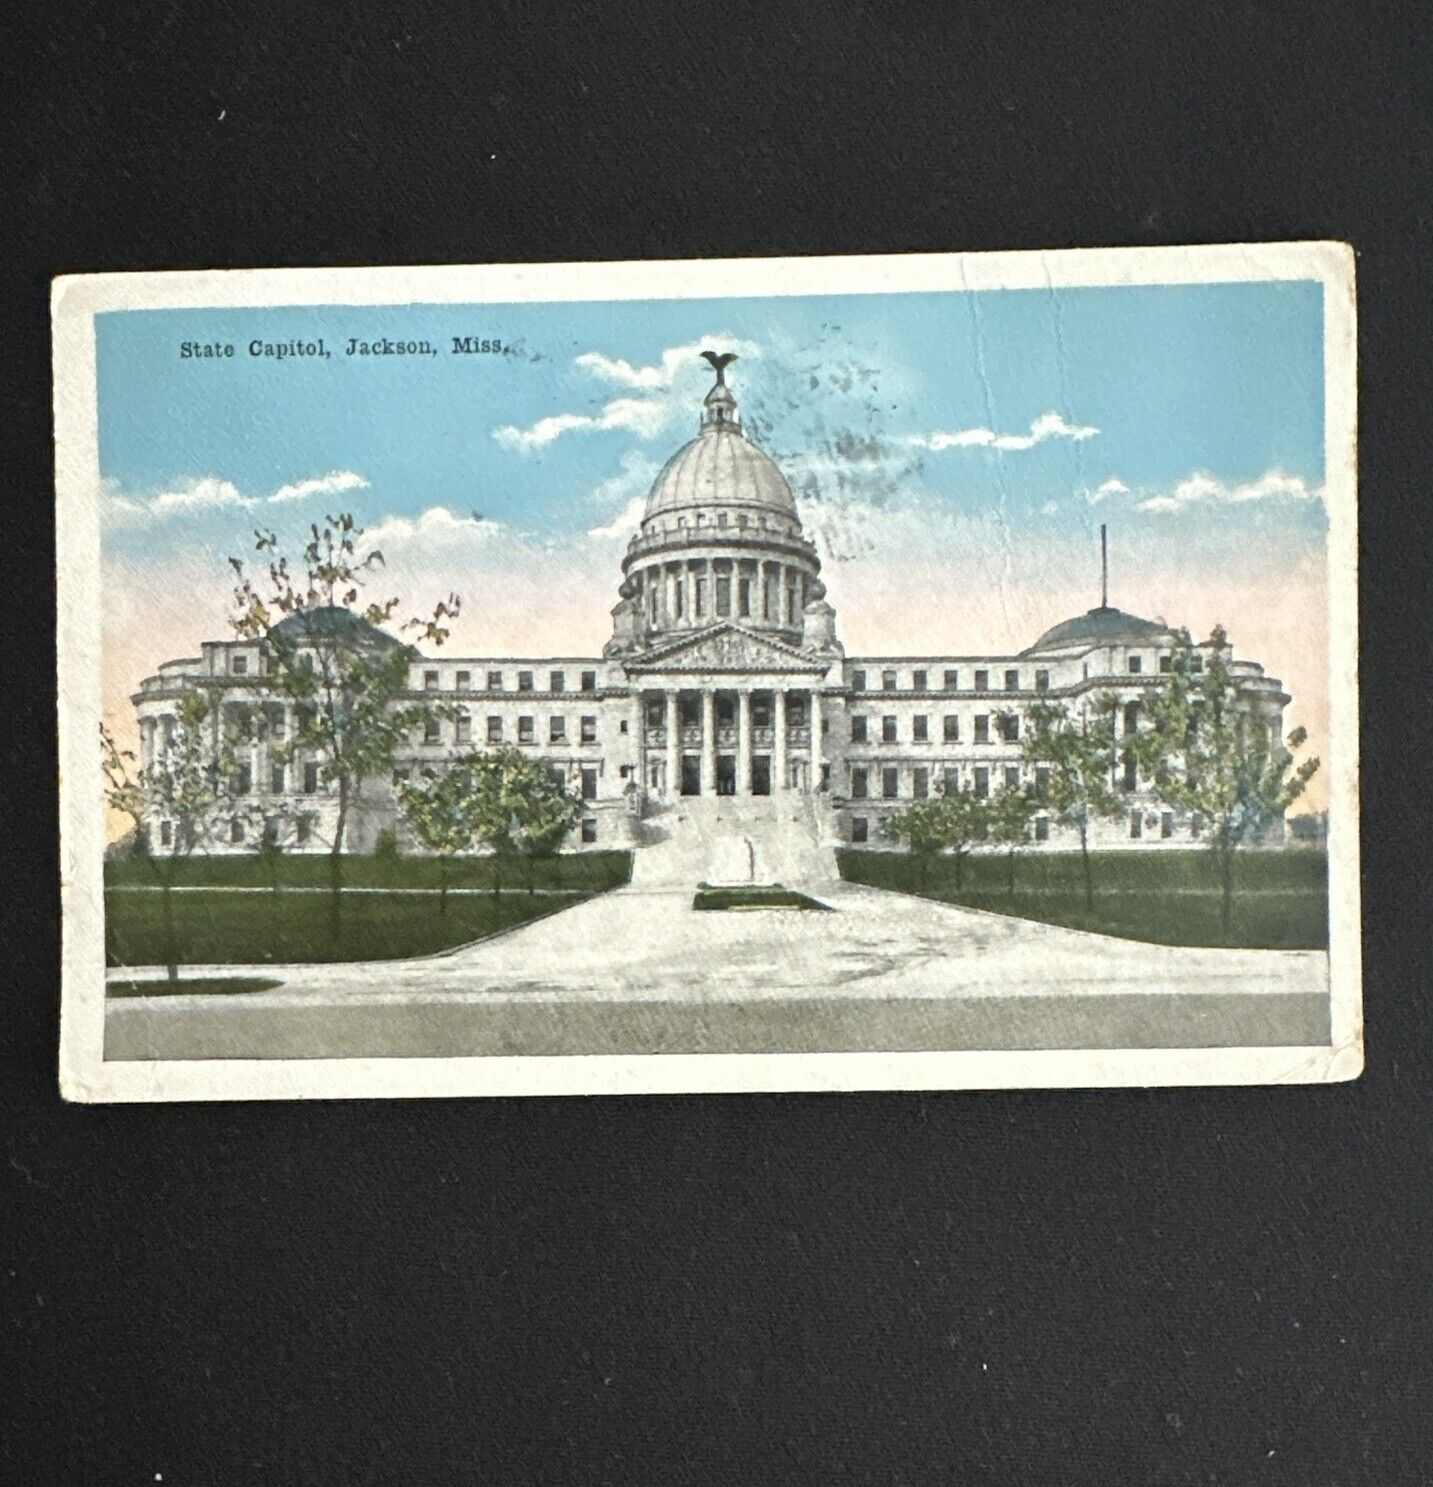 Antique/Postcard - State Capitol, Jackson Mississippi. 1917 Postmarked.